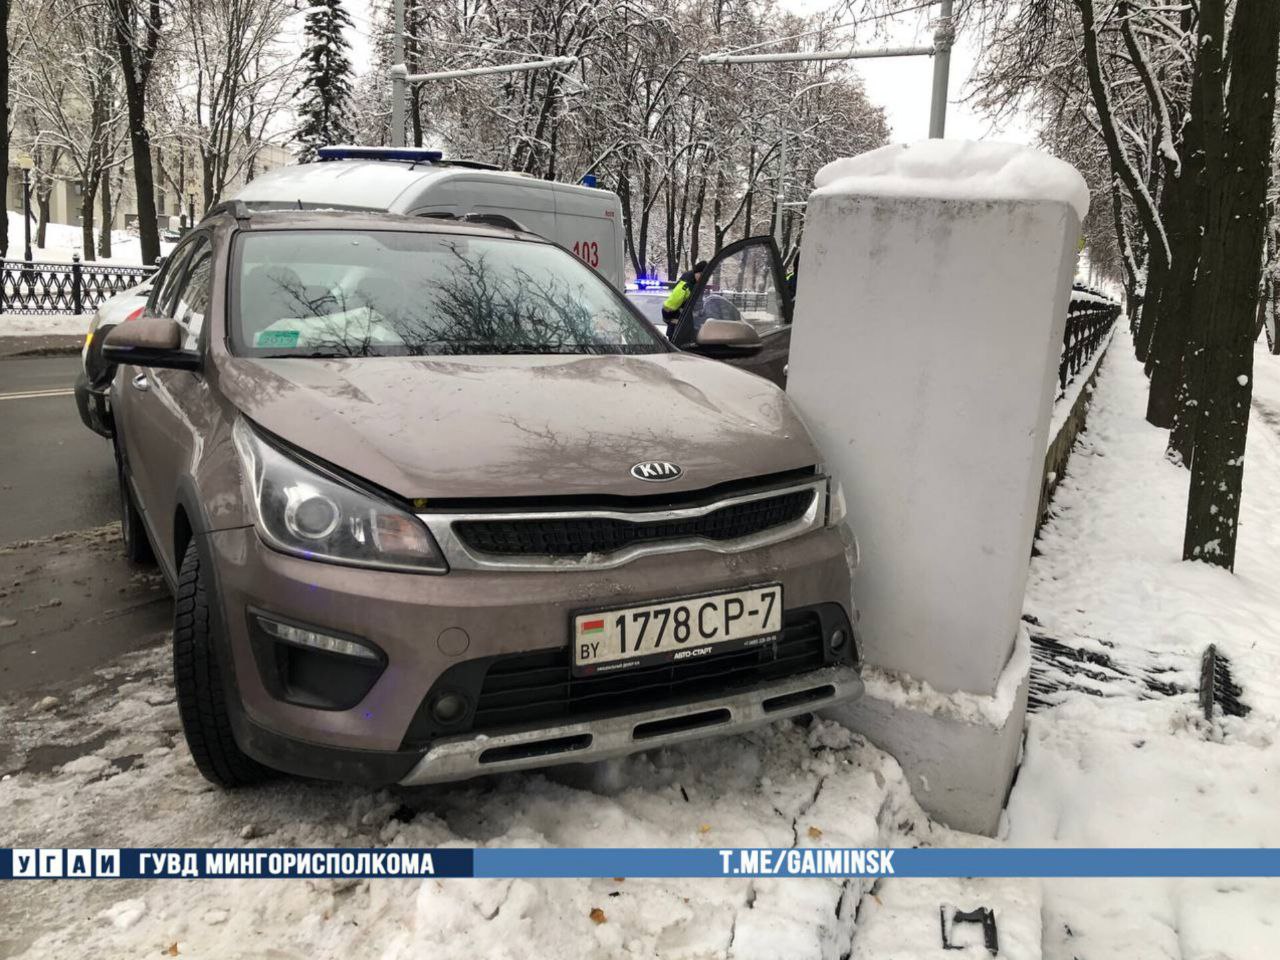 KIA врезался в забор парка в Минске, водитель скончался